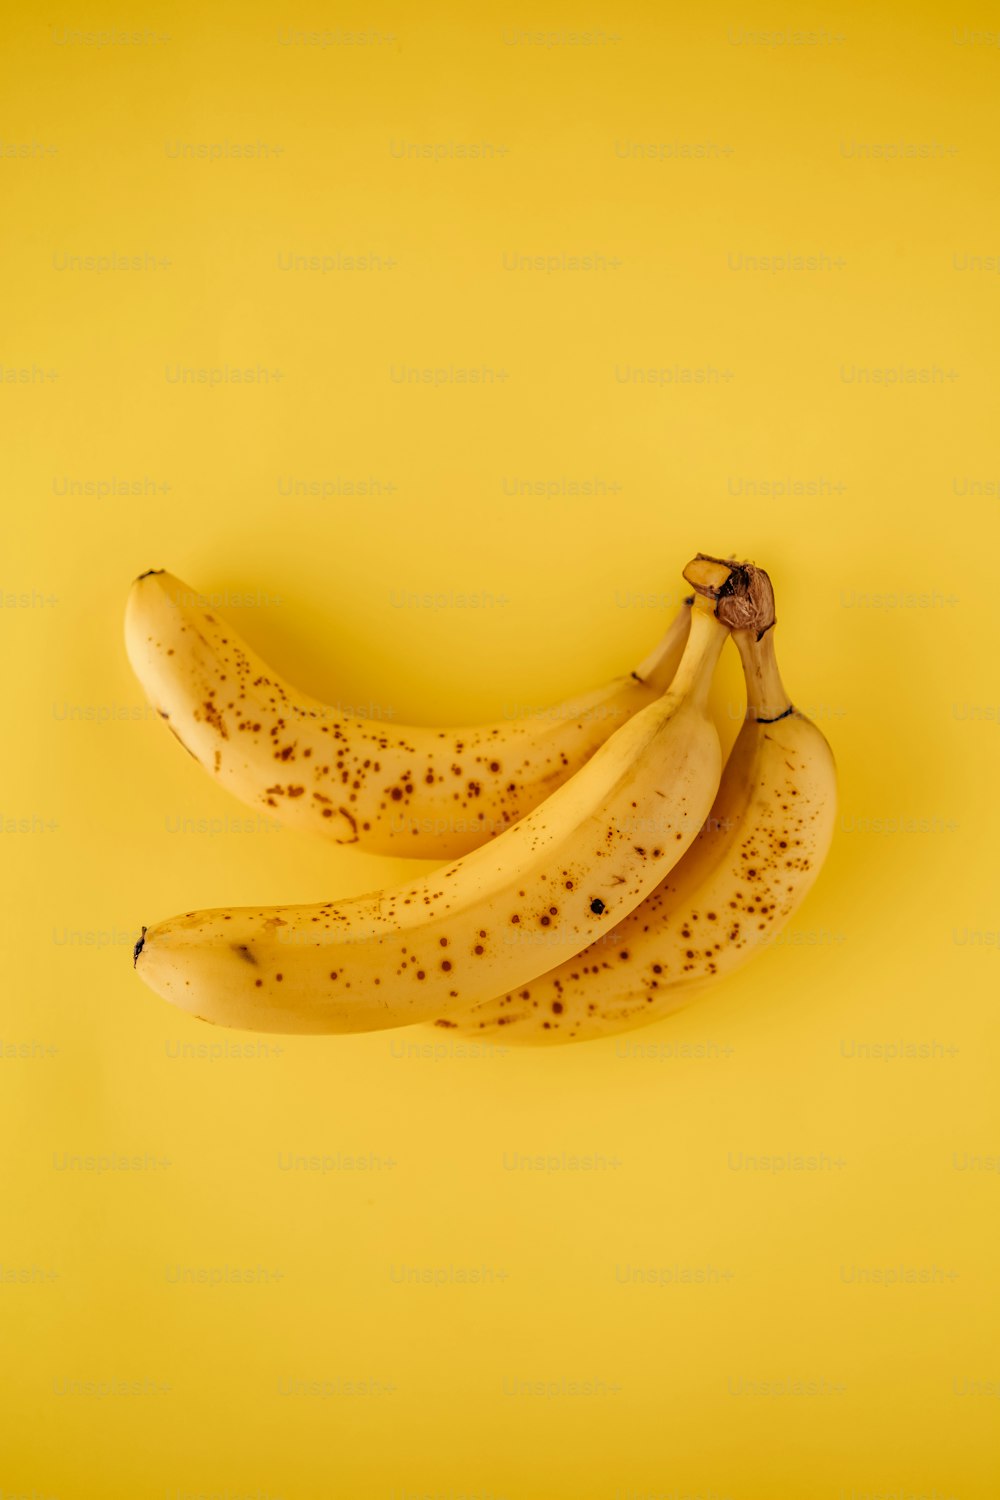 three ripe bananas on a yellow background